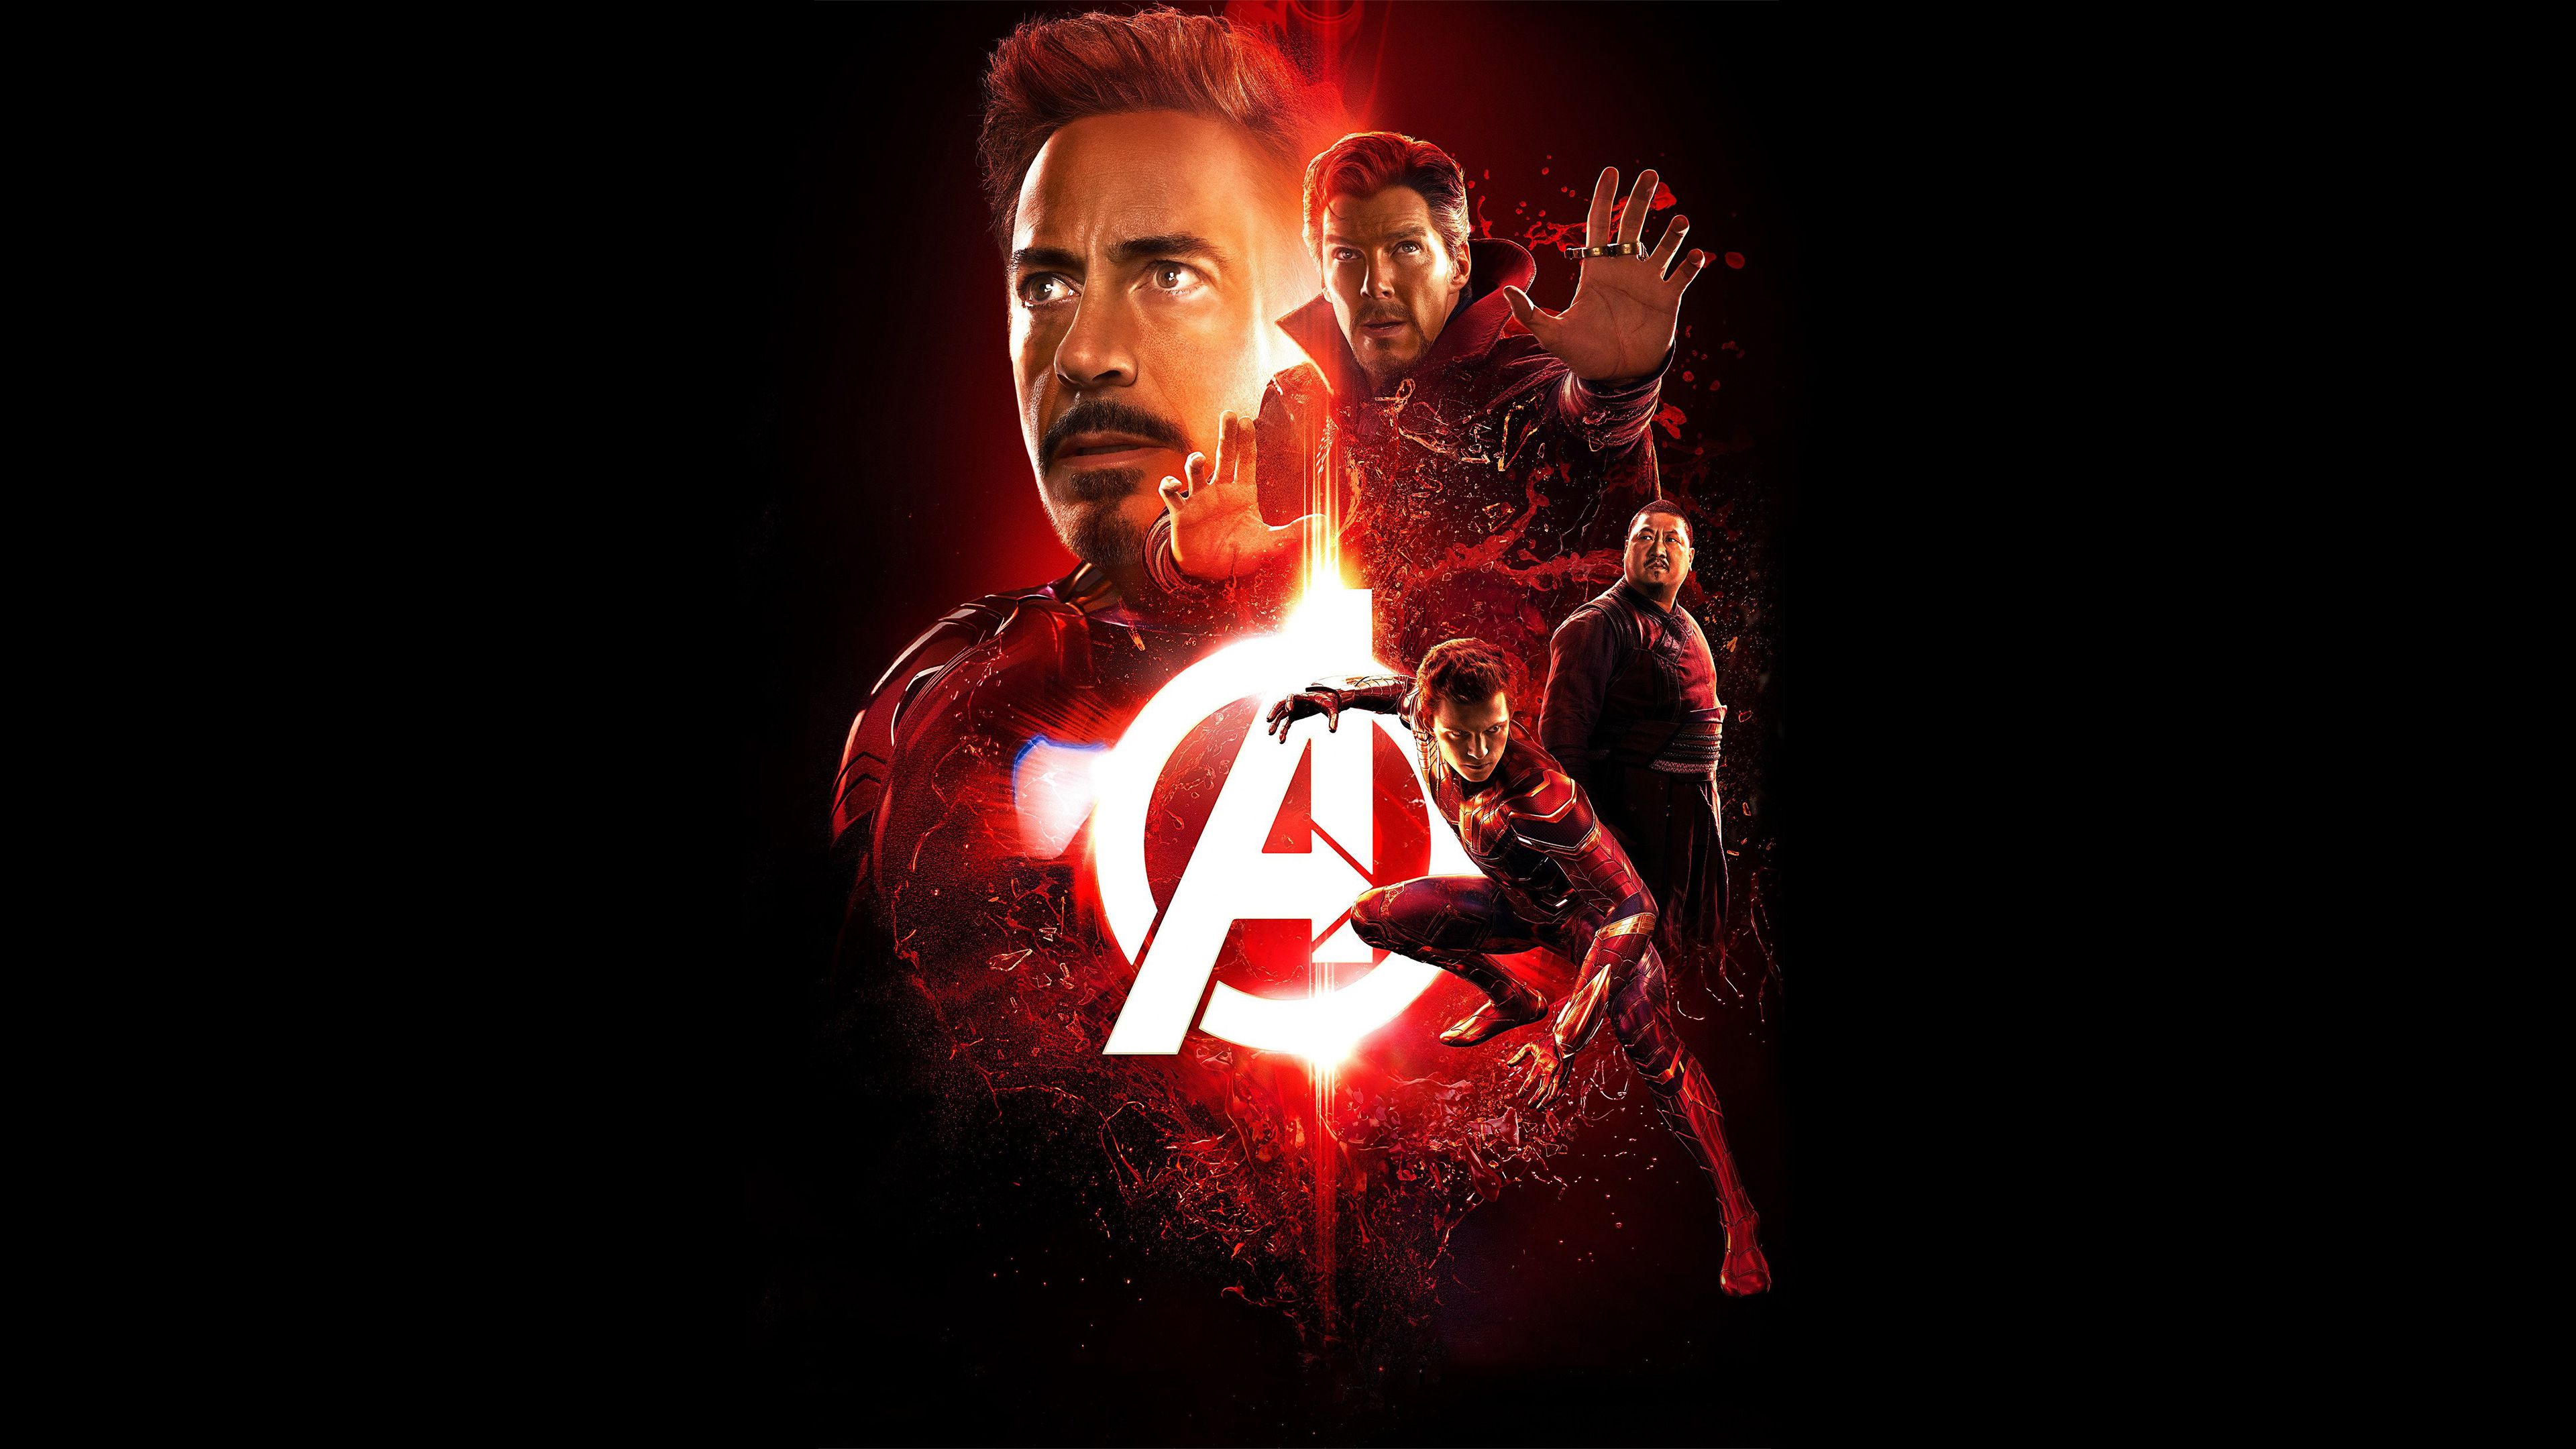 avengers infinity war, 2018 movies, movies, hd, 4k, poster, iron man, spiderman, doctor strange JPG 1510 kb Gallery HD Wallpaper